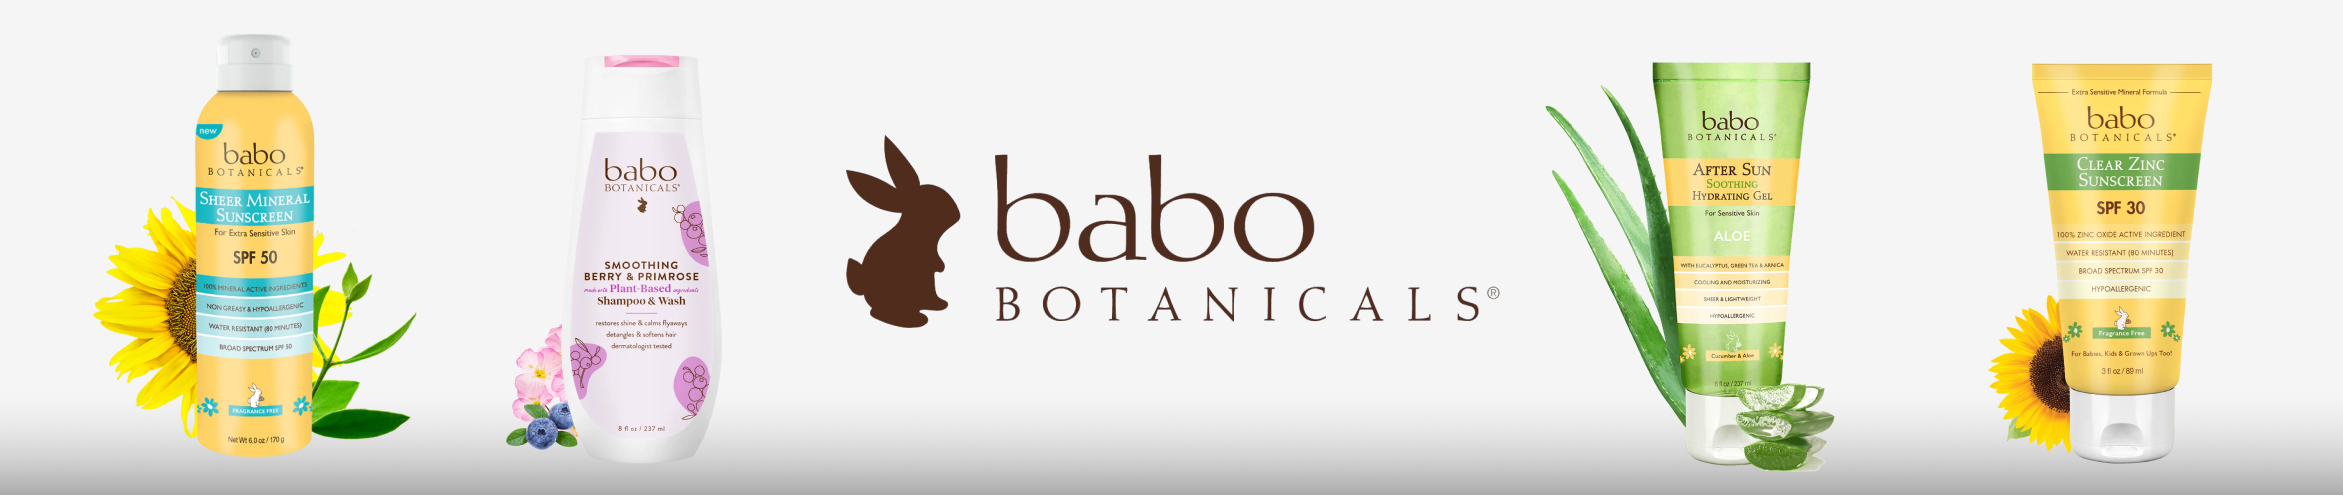 Babo Botanicals - Body & Bath